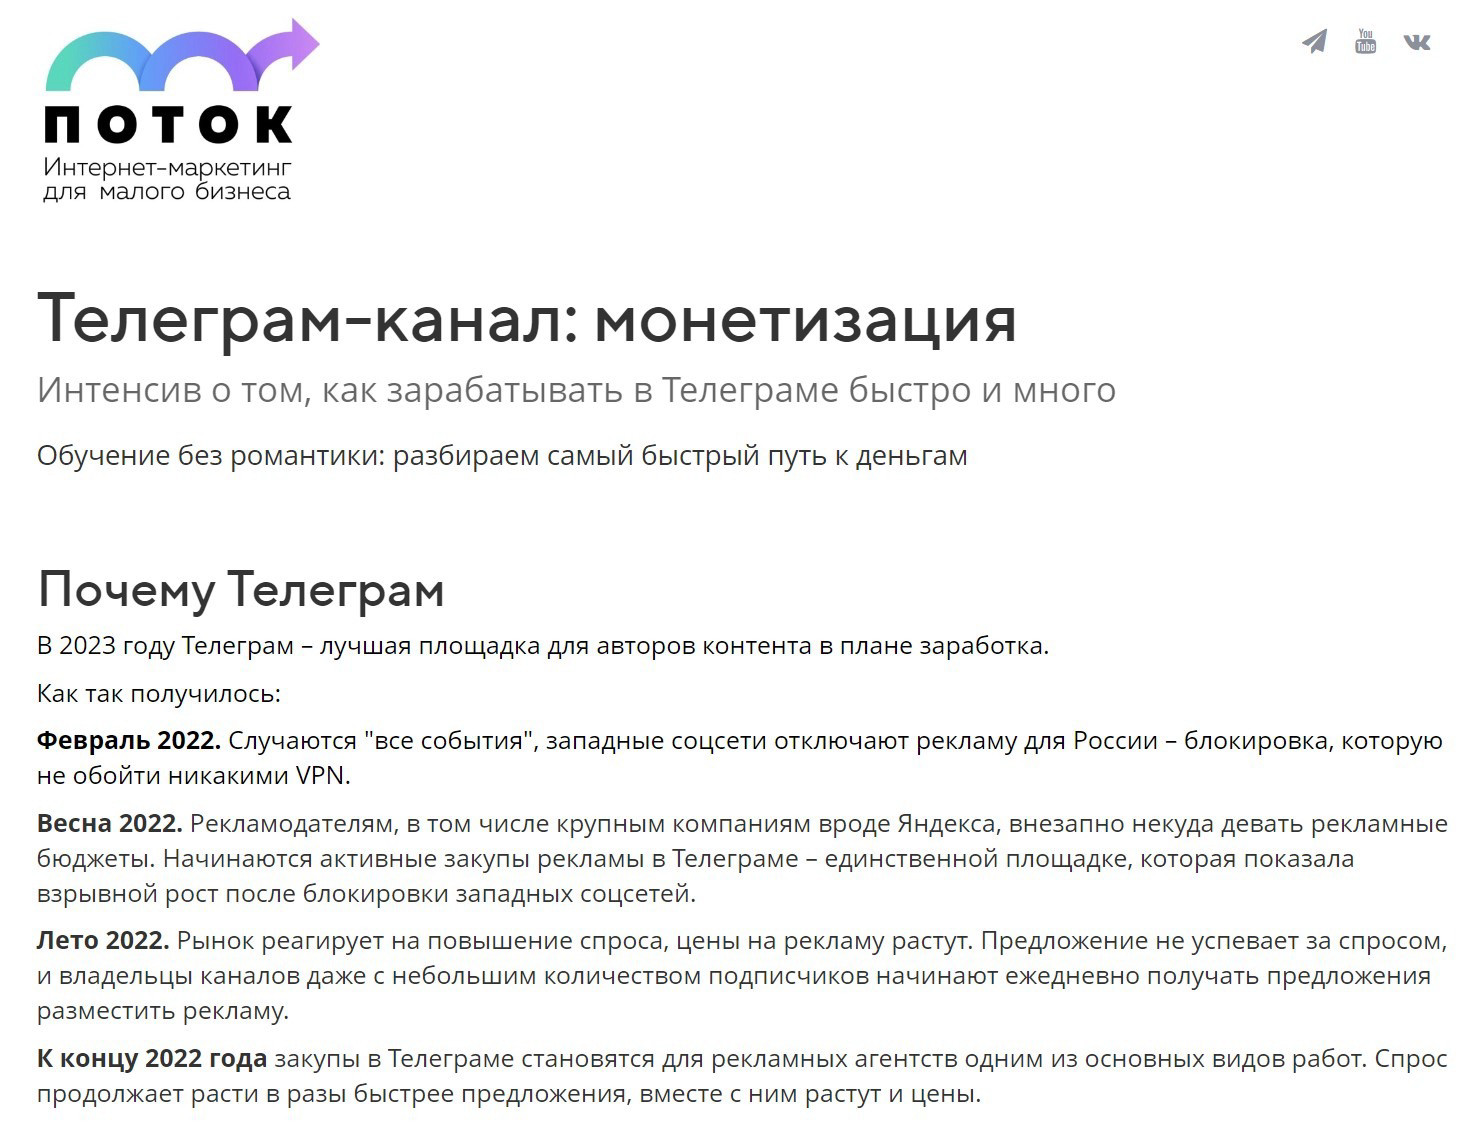 "Телеграм-канал: монетизация" от Алексея Павликова